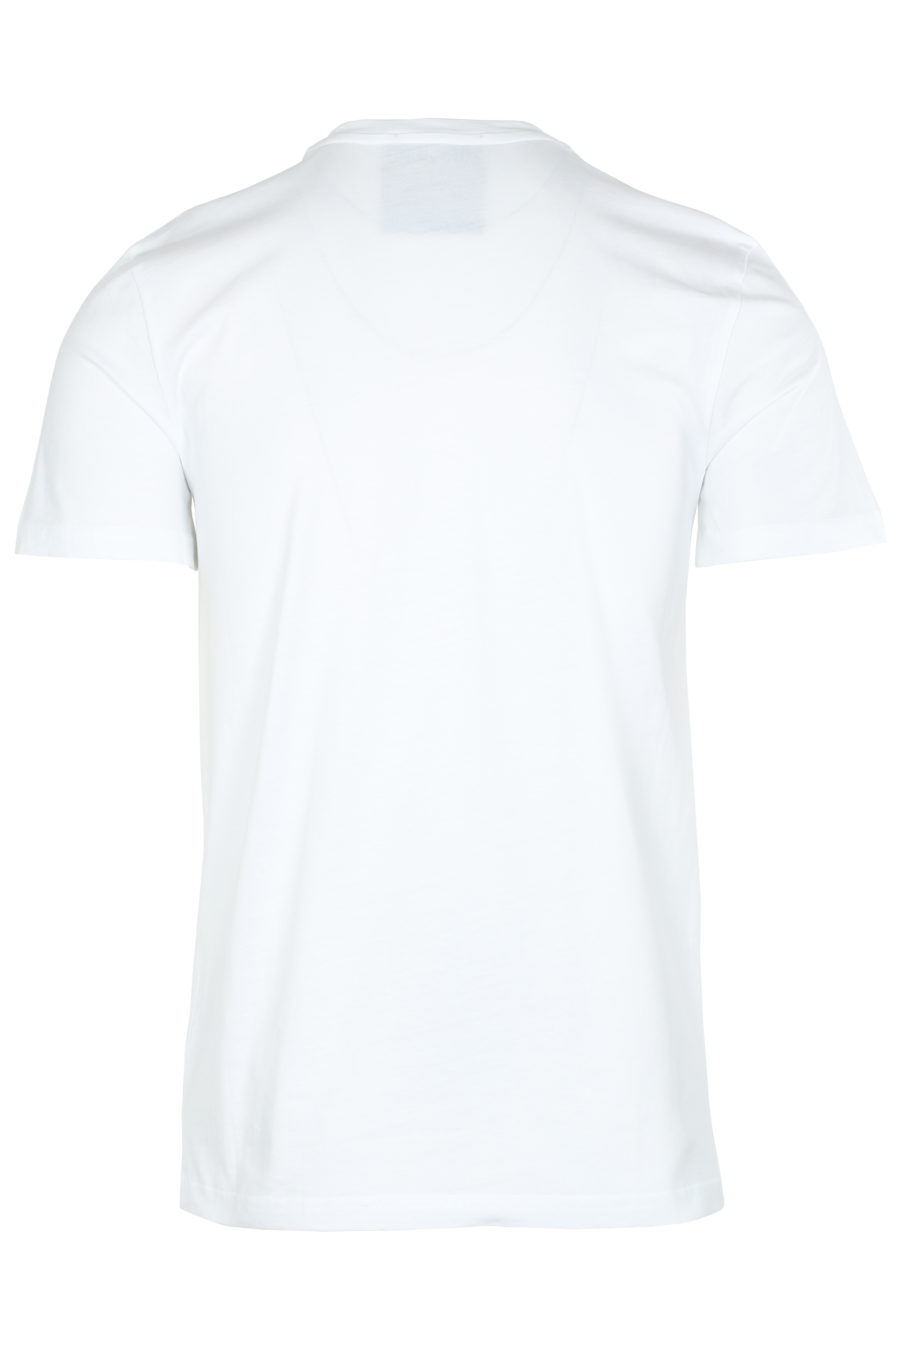 Camiseta blanca con logo grande - IMG 6173